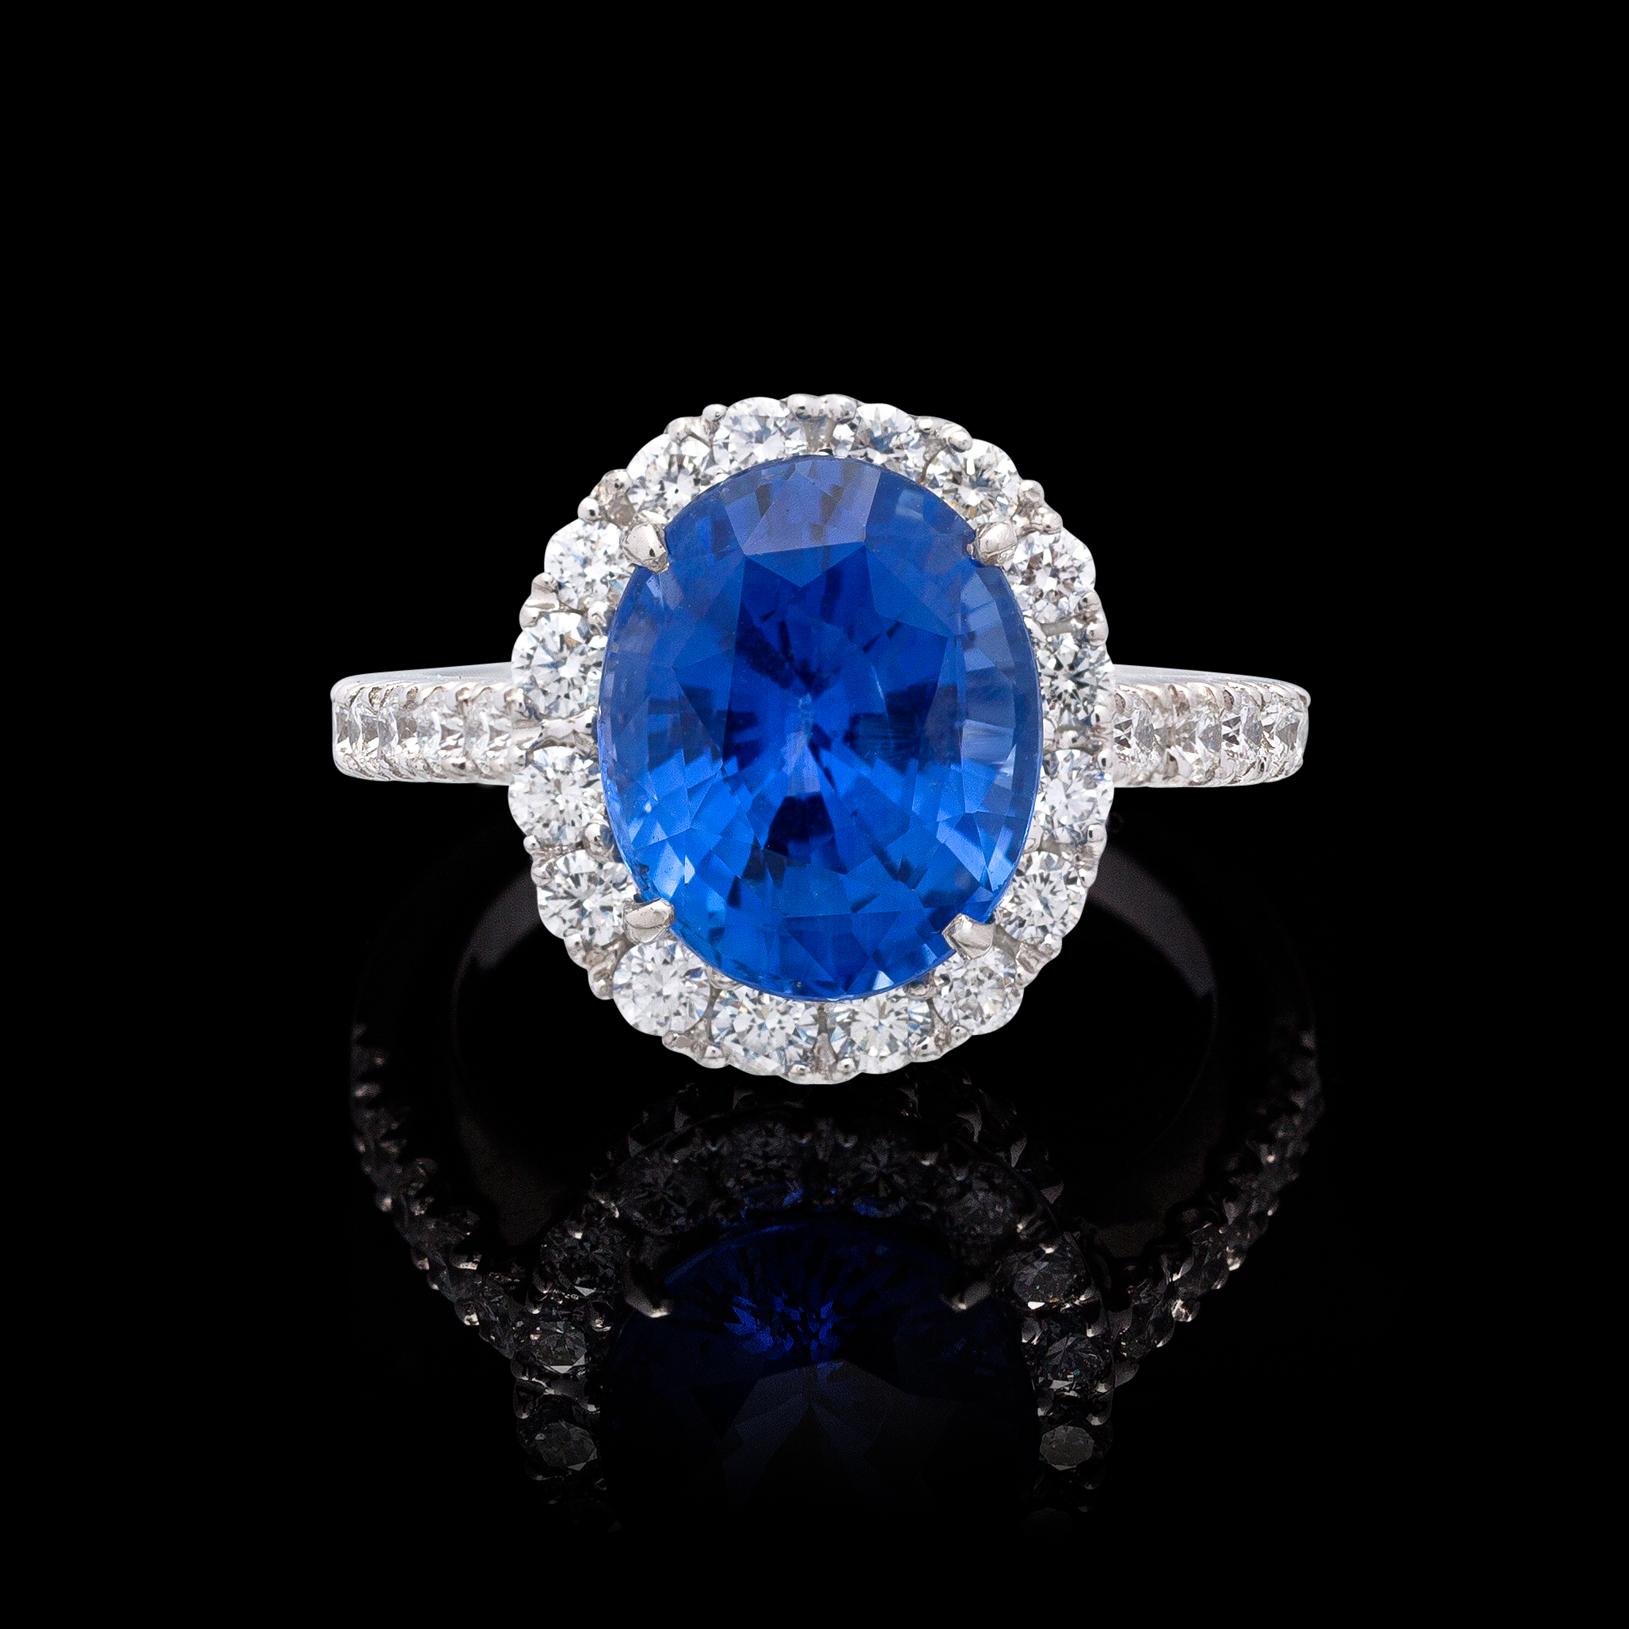 Oval Cut 5.24 Carat Sri Lankan Sapphire and Diamond Ring